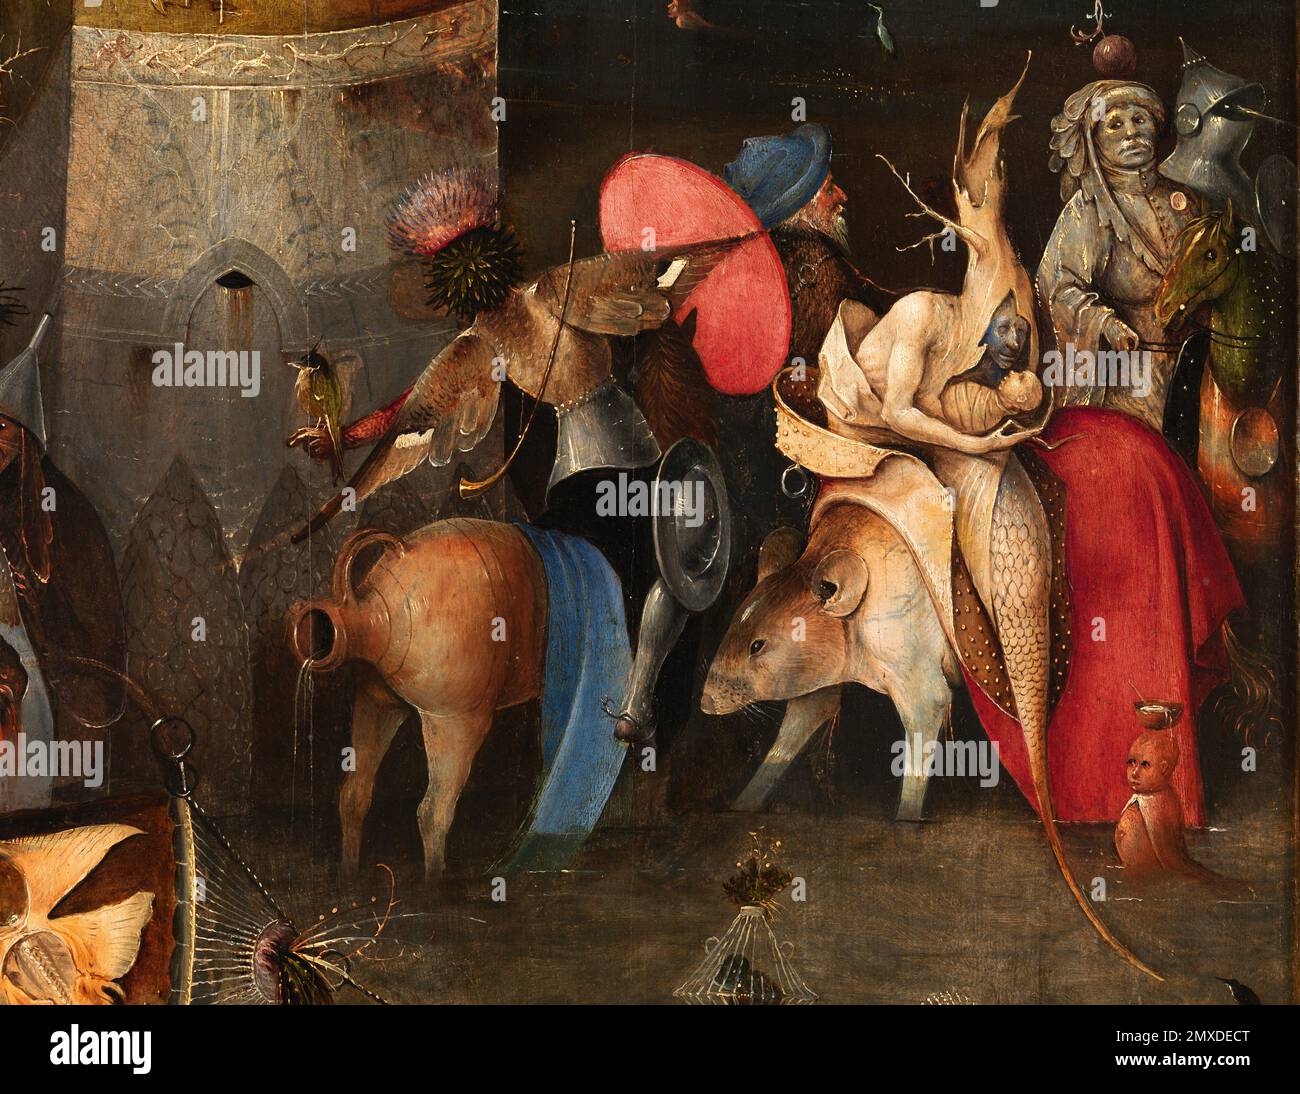 The Temptation of Saint Anthony (Triptych). Detail. Museum: Museu Nacional de Arte Antiga, Lisbon. Author: HIERONYMUS BOSCH. Stock Photo